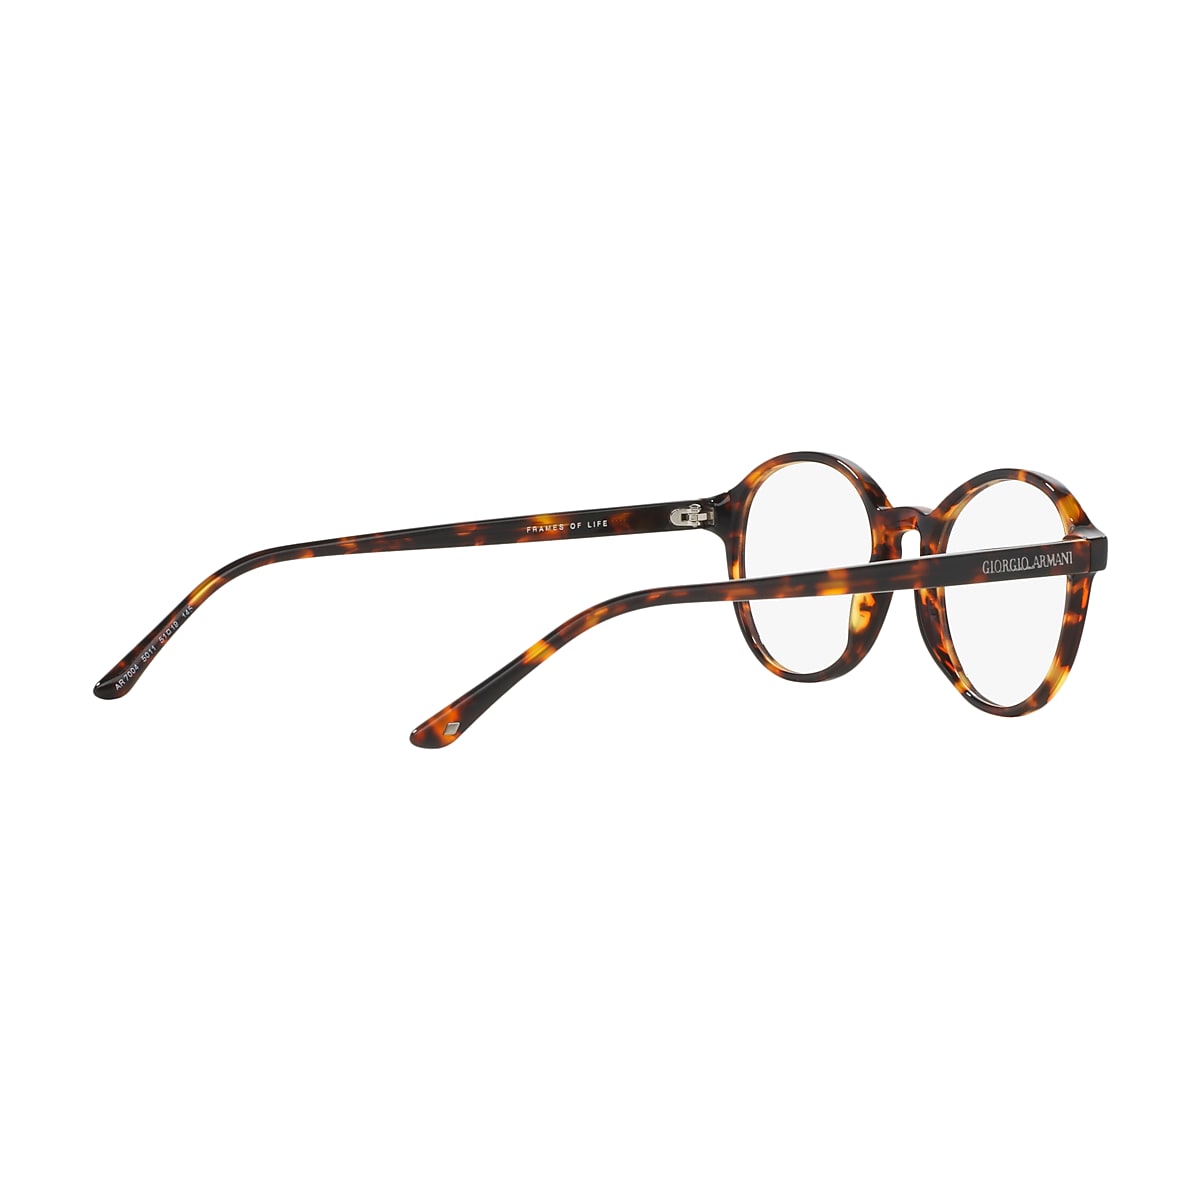 Giorgio Armani AR7004 5946 Glasses